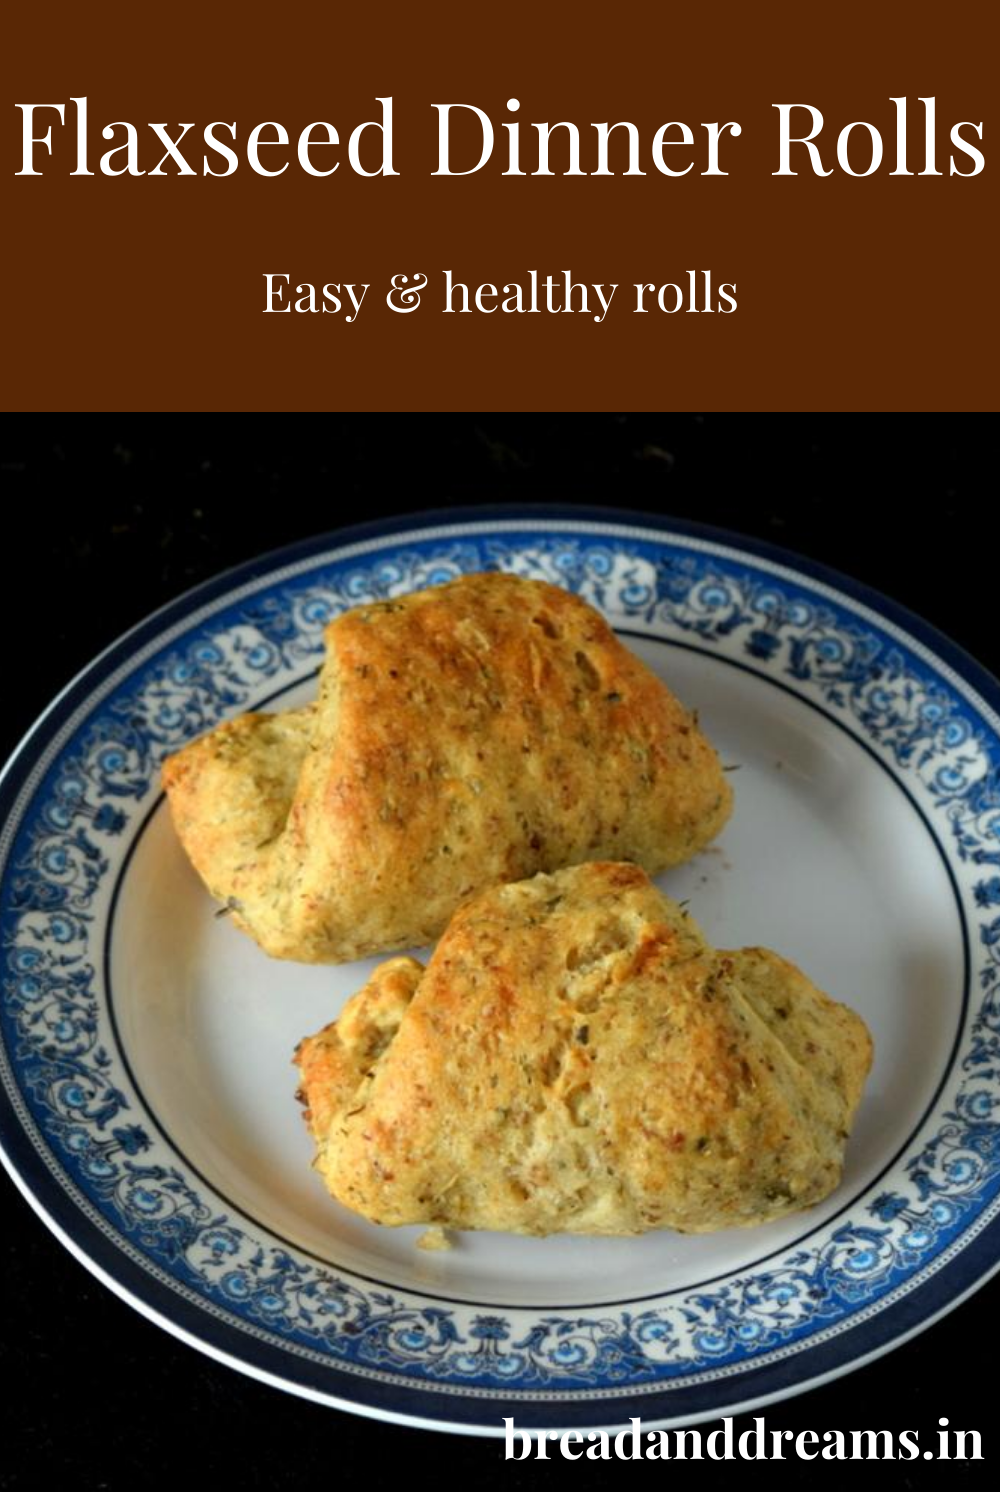 Flaxseed dinner rolls